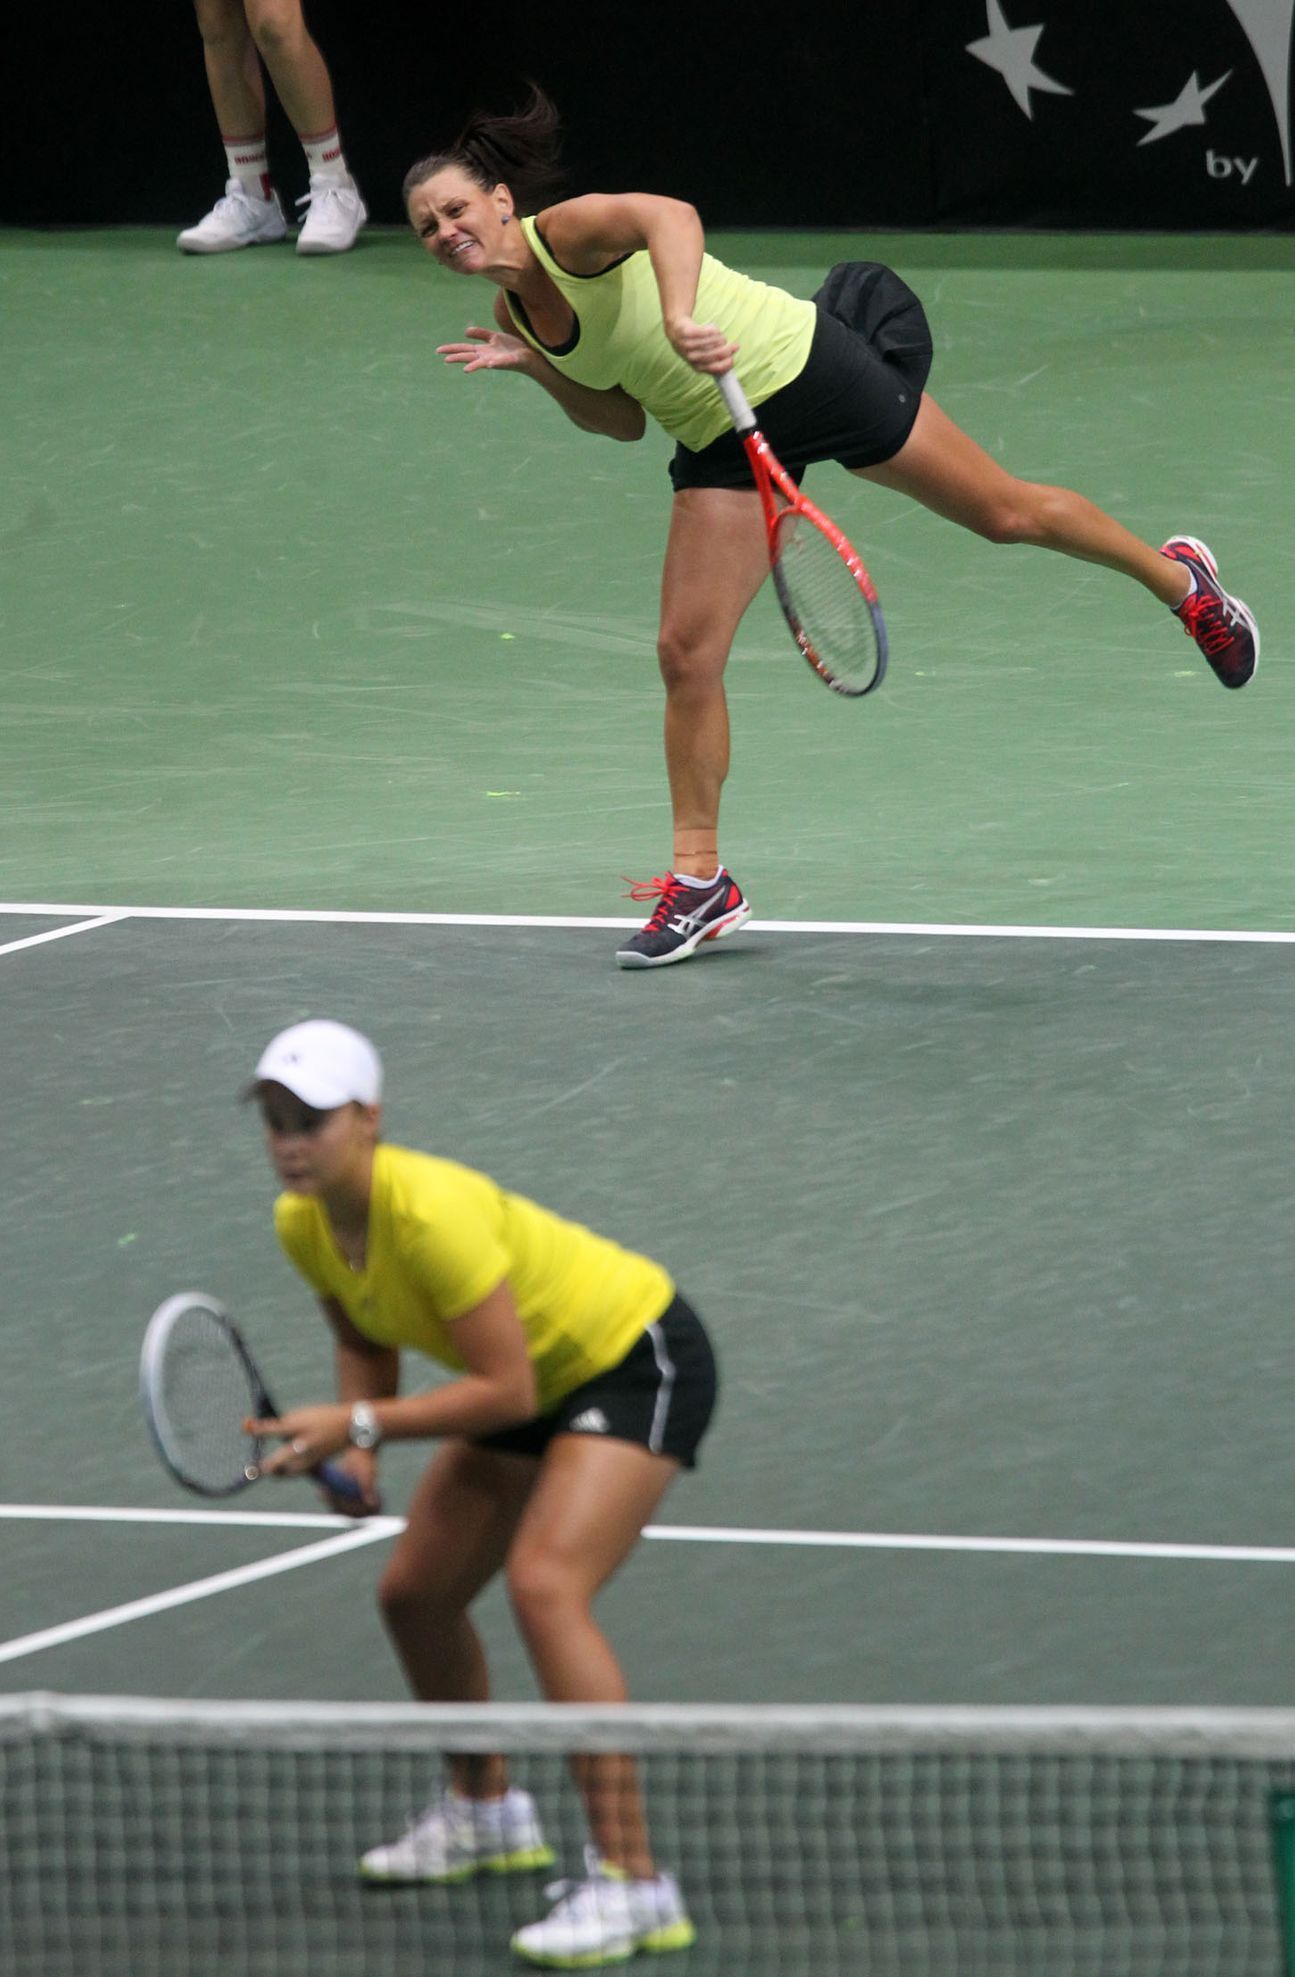 Fed Cup, Česko - Austrálie : Ashleigh Bartyová a Casey Dellacquaová